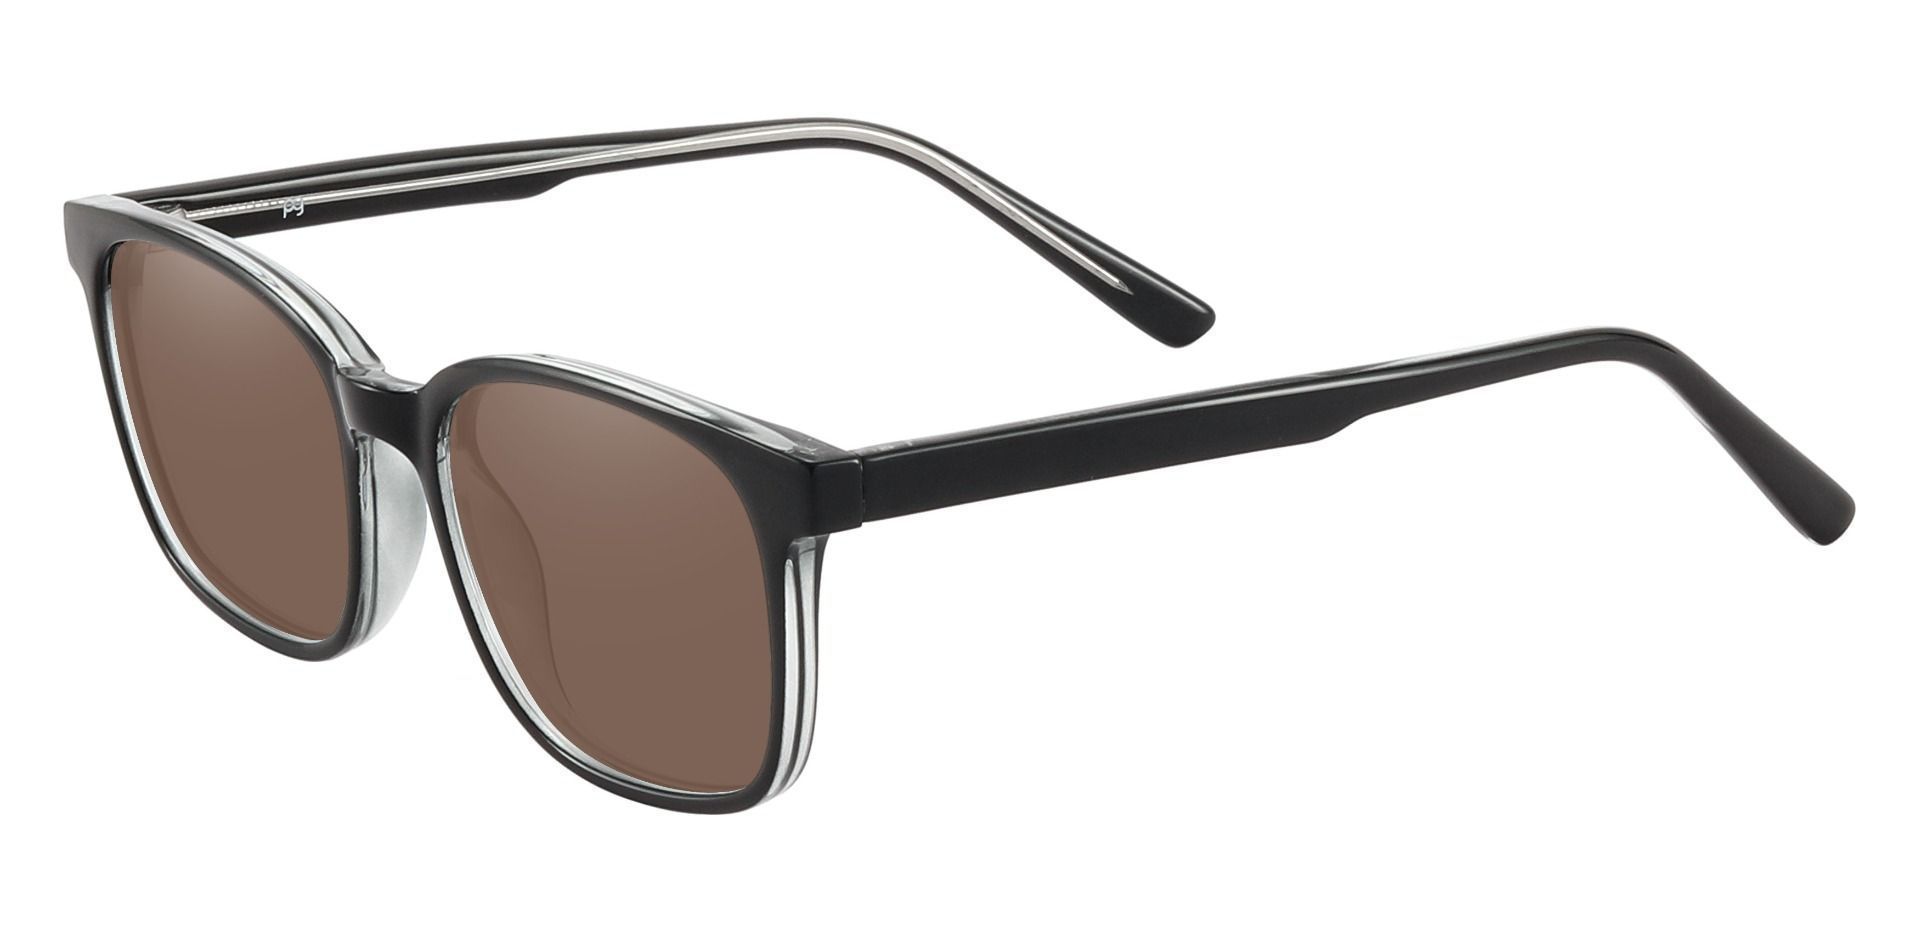 Windsor Rectangle Prescription Sunglasses - Black Frame With Brown Lenses